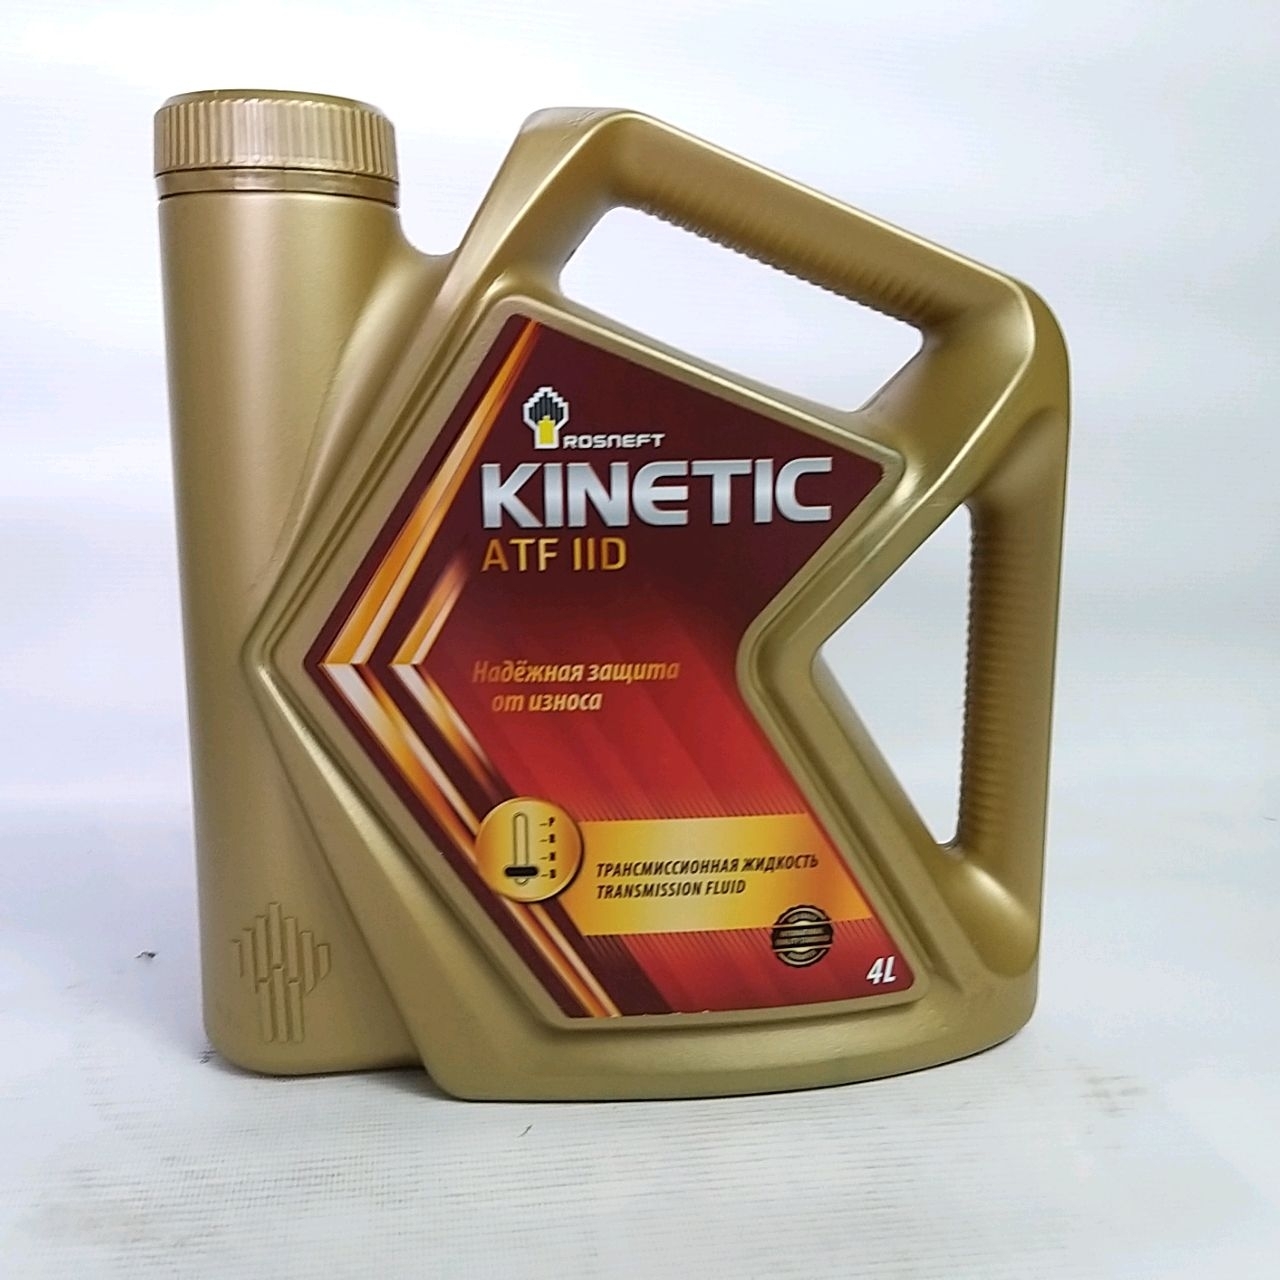 Kinetic atf. Трансмиссионное масло Роснефть Kinetic ATF iid. Rosneft Kinetic ATF Type t-IV артикул 4л. Роснефть 10 40 Магнум. Роснефть Kinetic Hypoid 75w-90 gl-5 полусинтетика 1 литр.